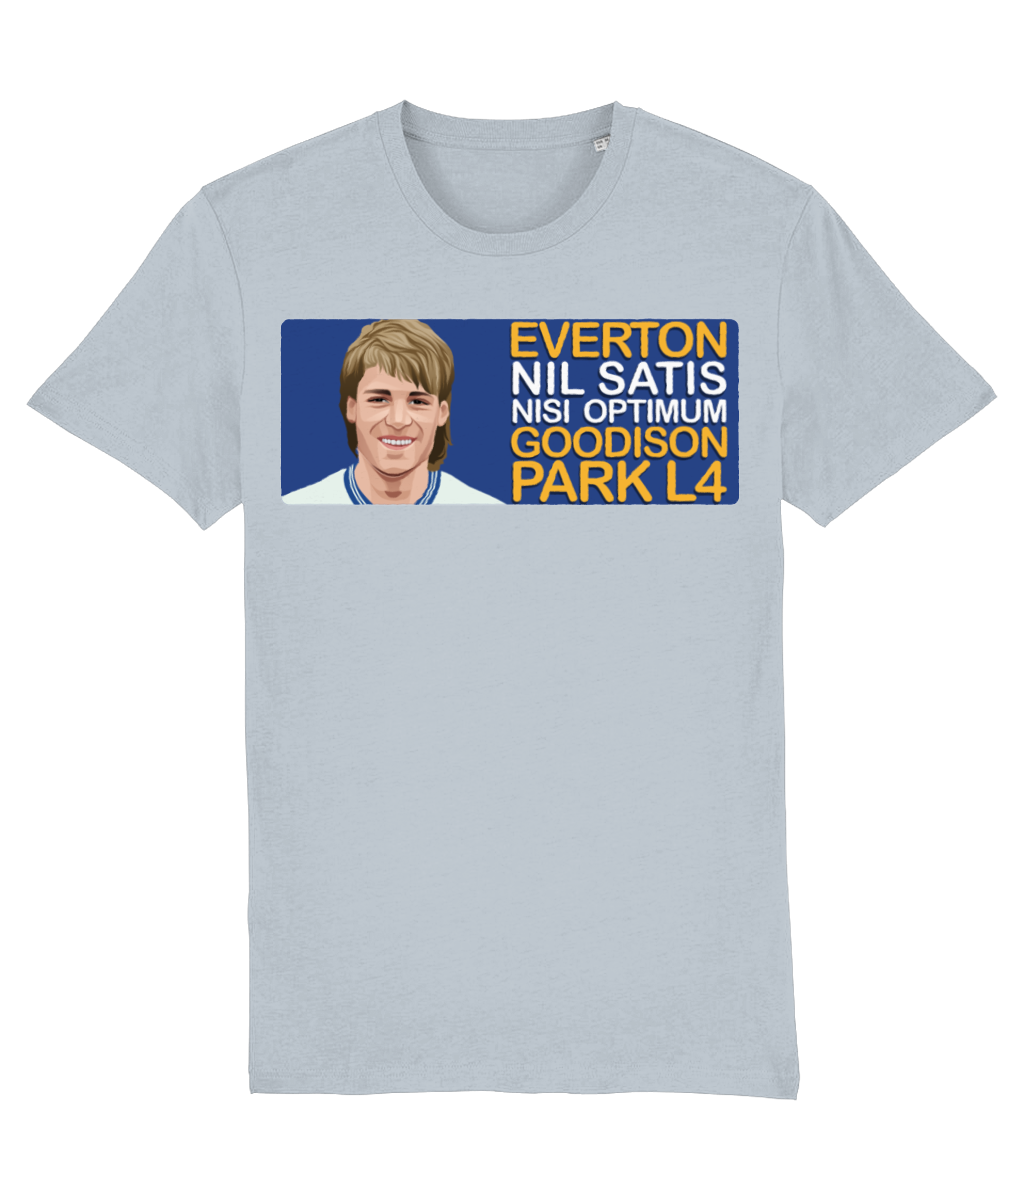 Everton 'Psycho' Pat van den Hauwe Goodison Park L4 Unisex T-Shirt Stanley/Stella Retrotext   